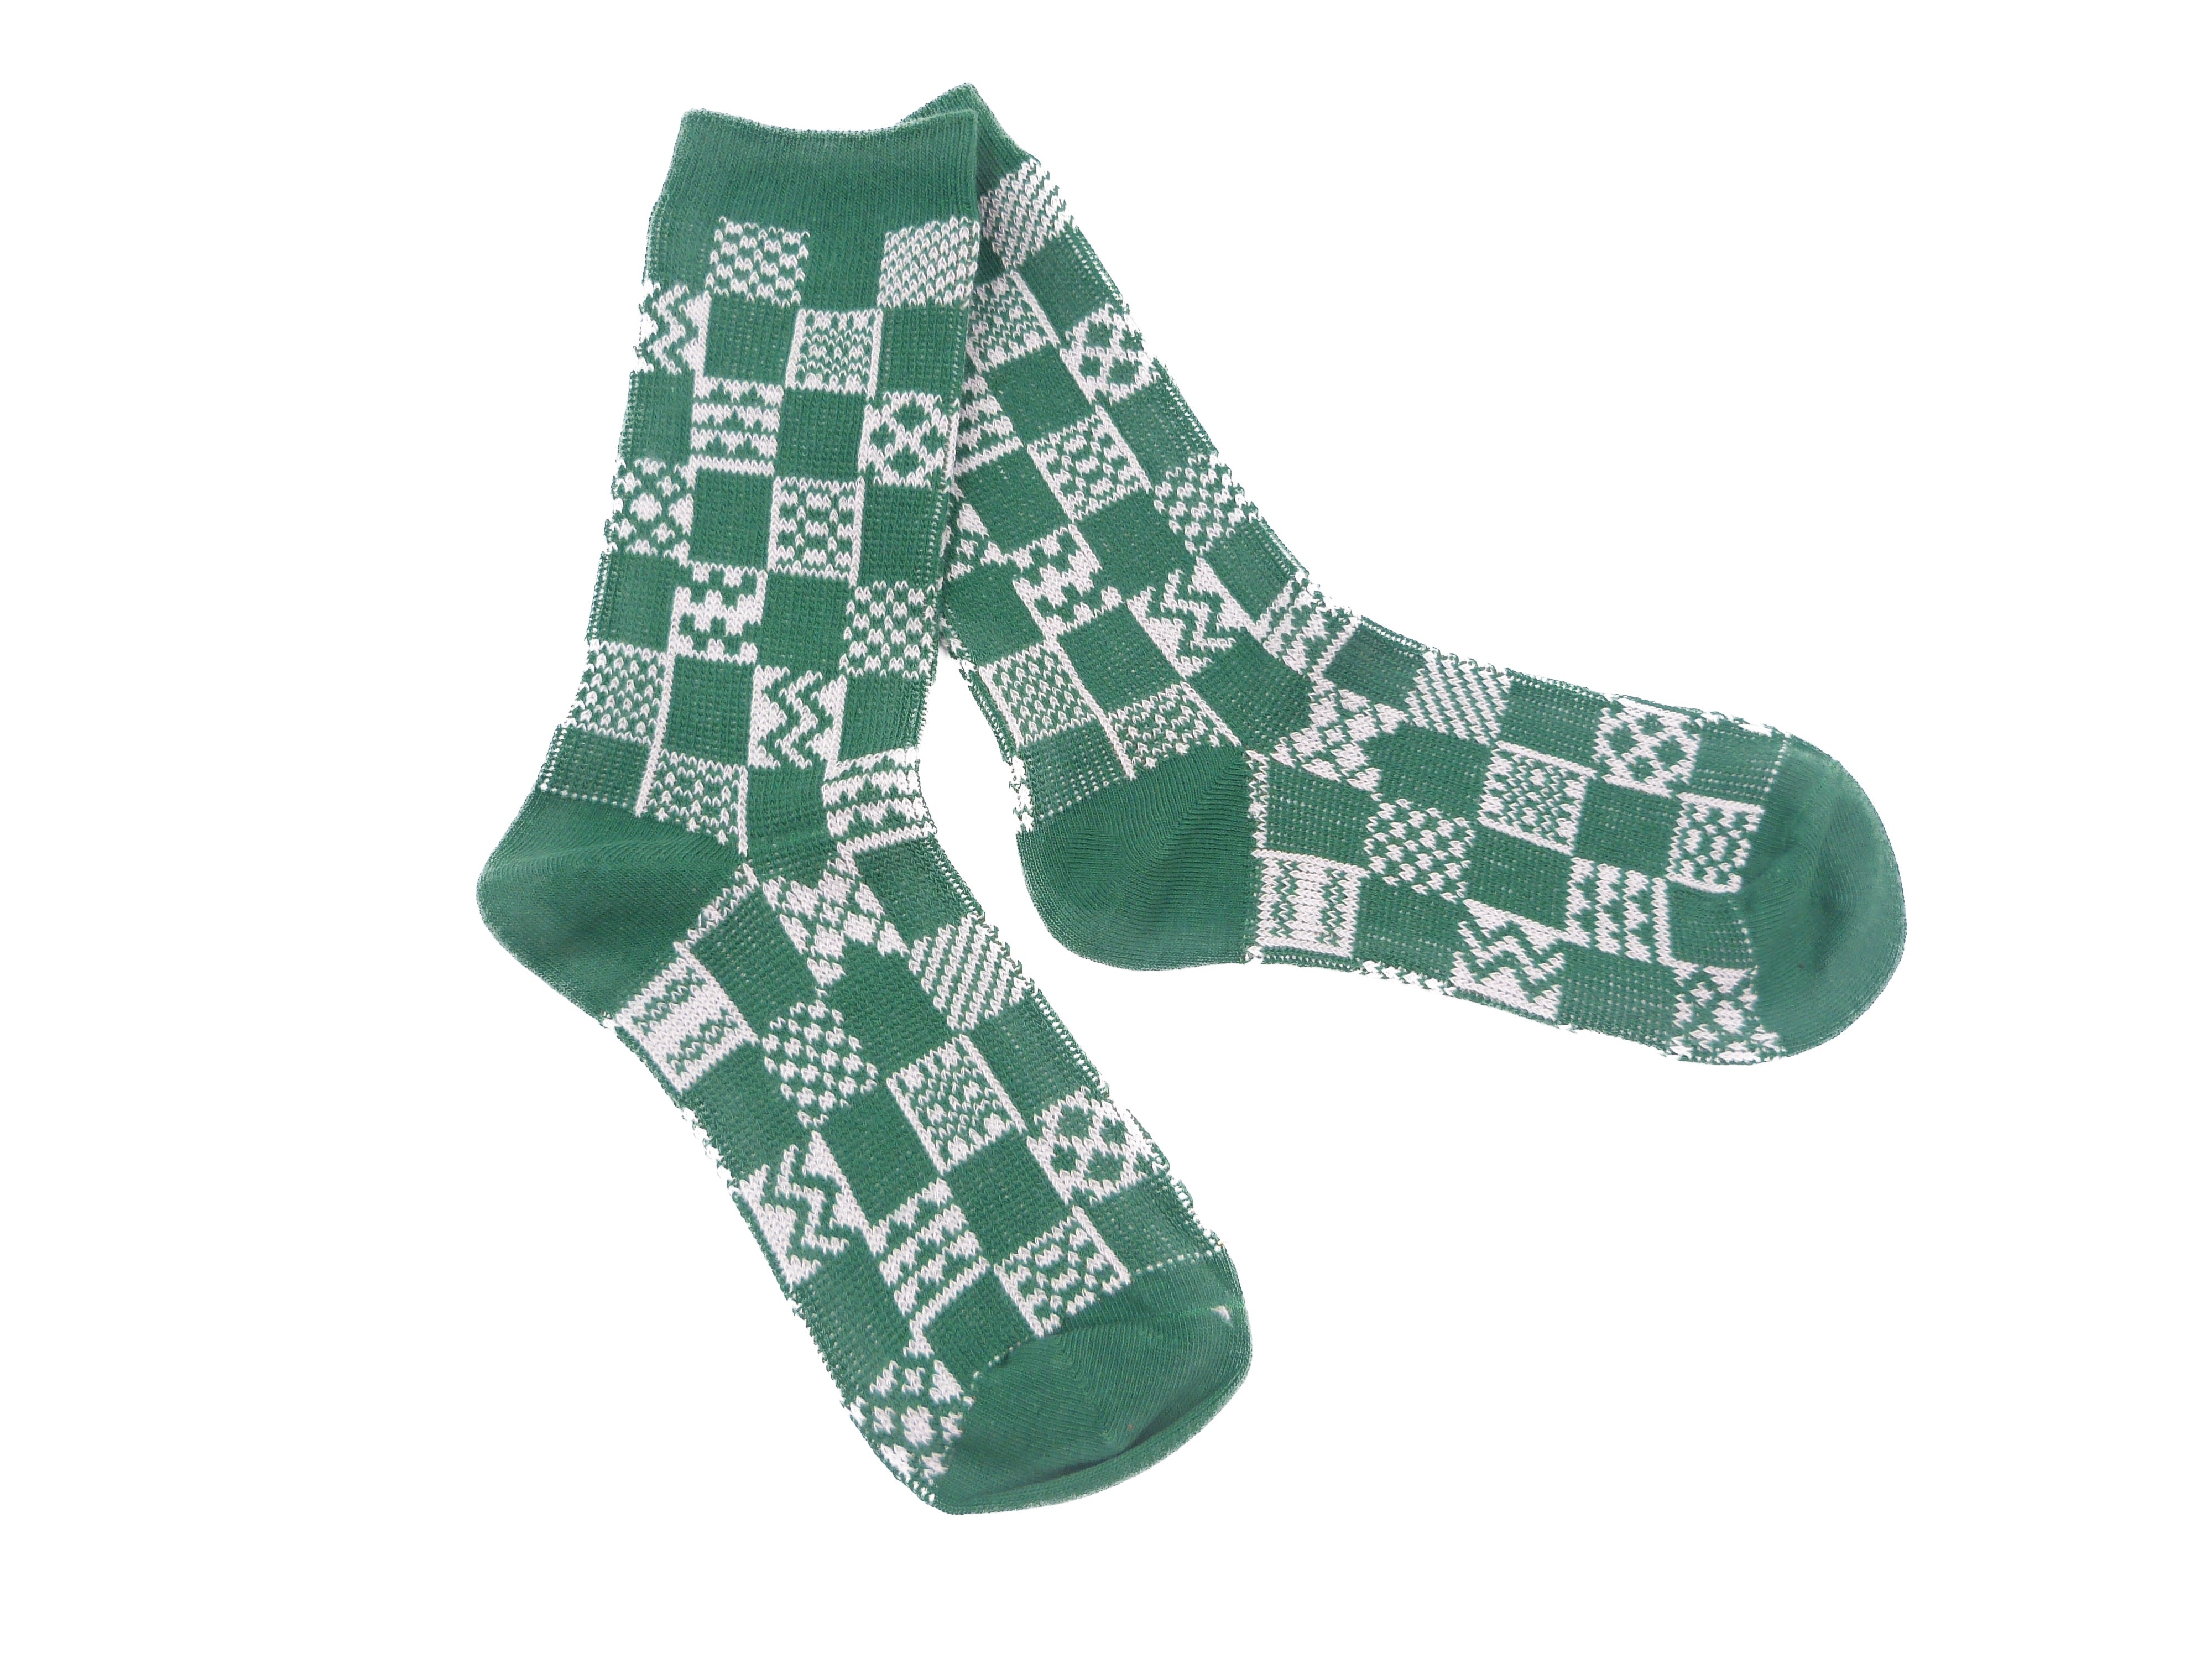 Checkered Tartan Printed Socks – Claudia & Jason